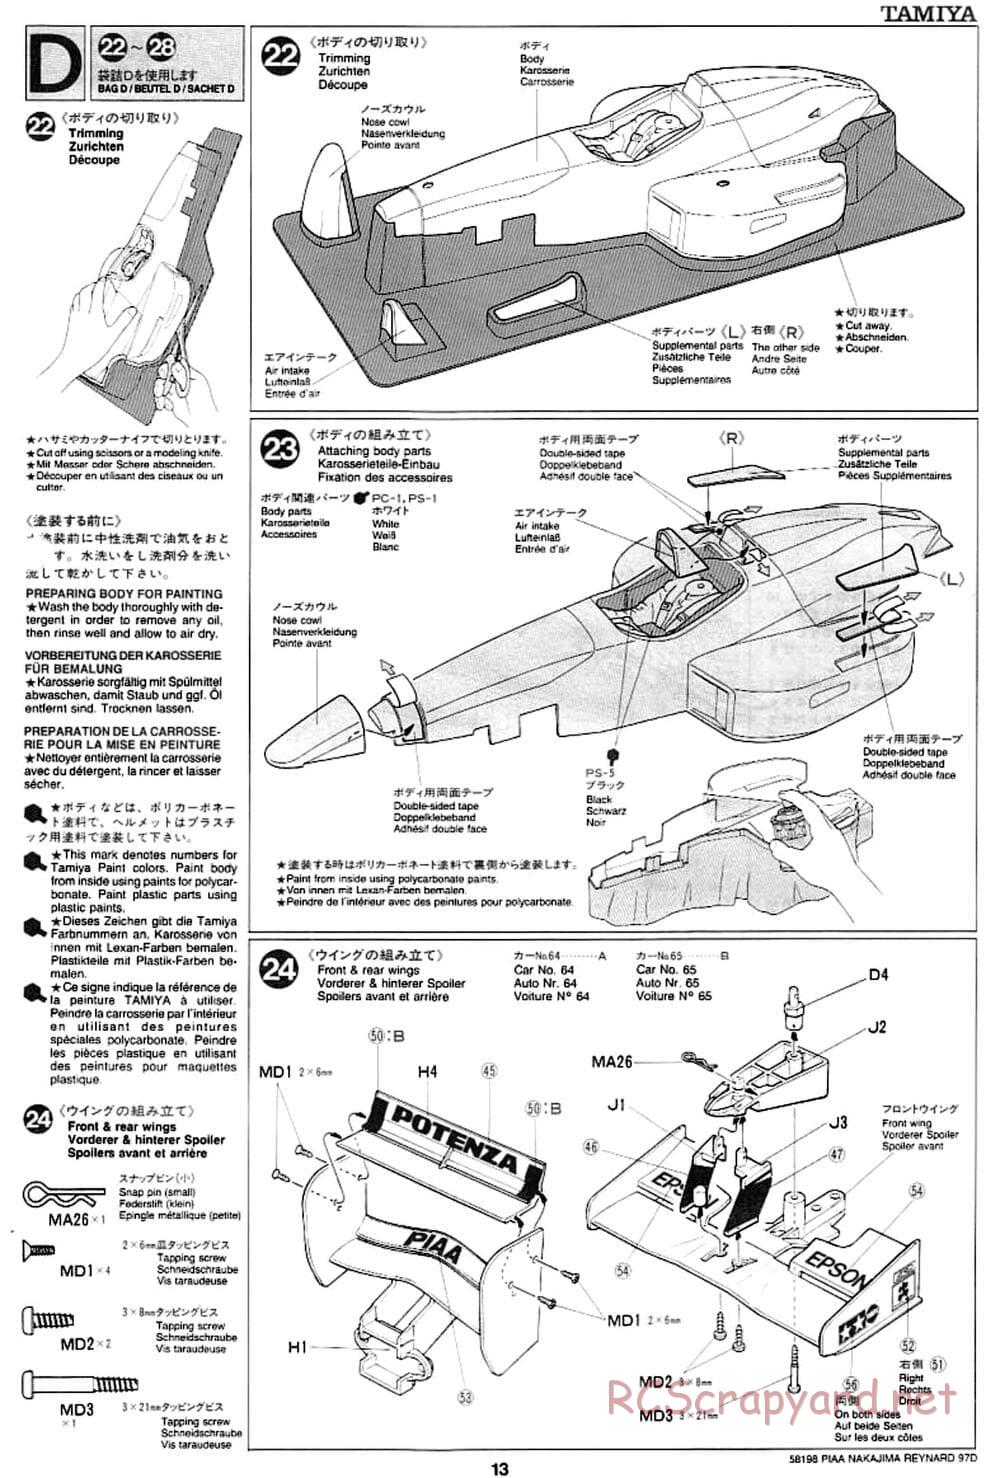 Tamiya - PIAA Nakajima Reynard 97D - F103 Chassis - Manual - Page 13